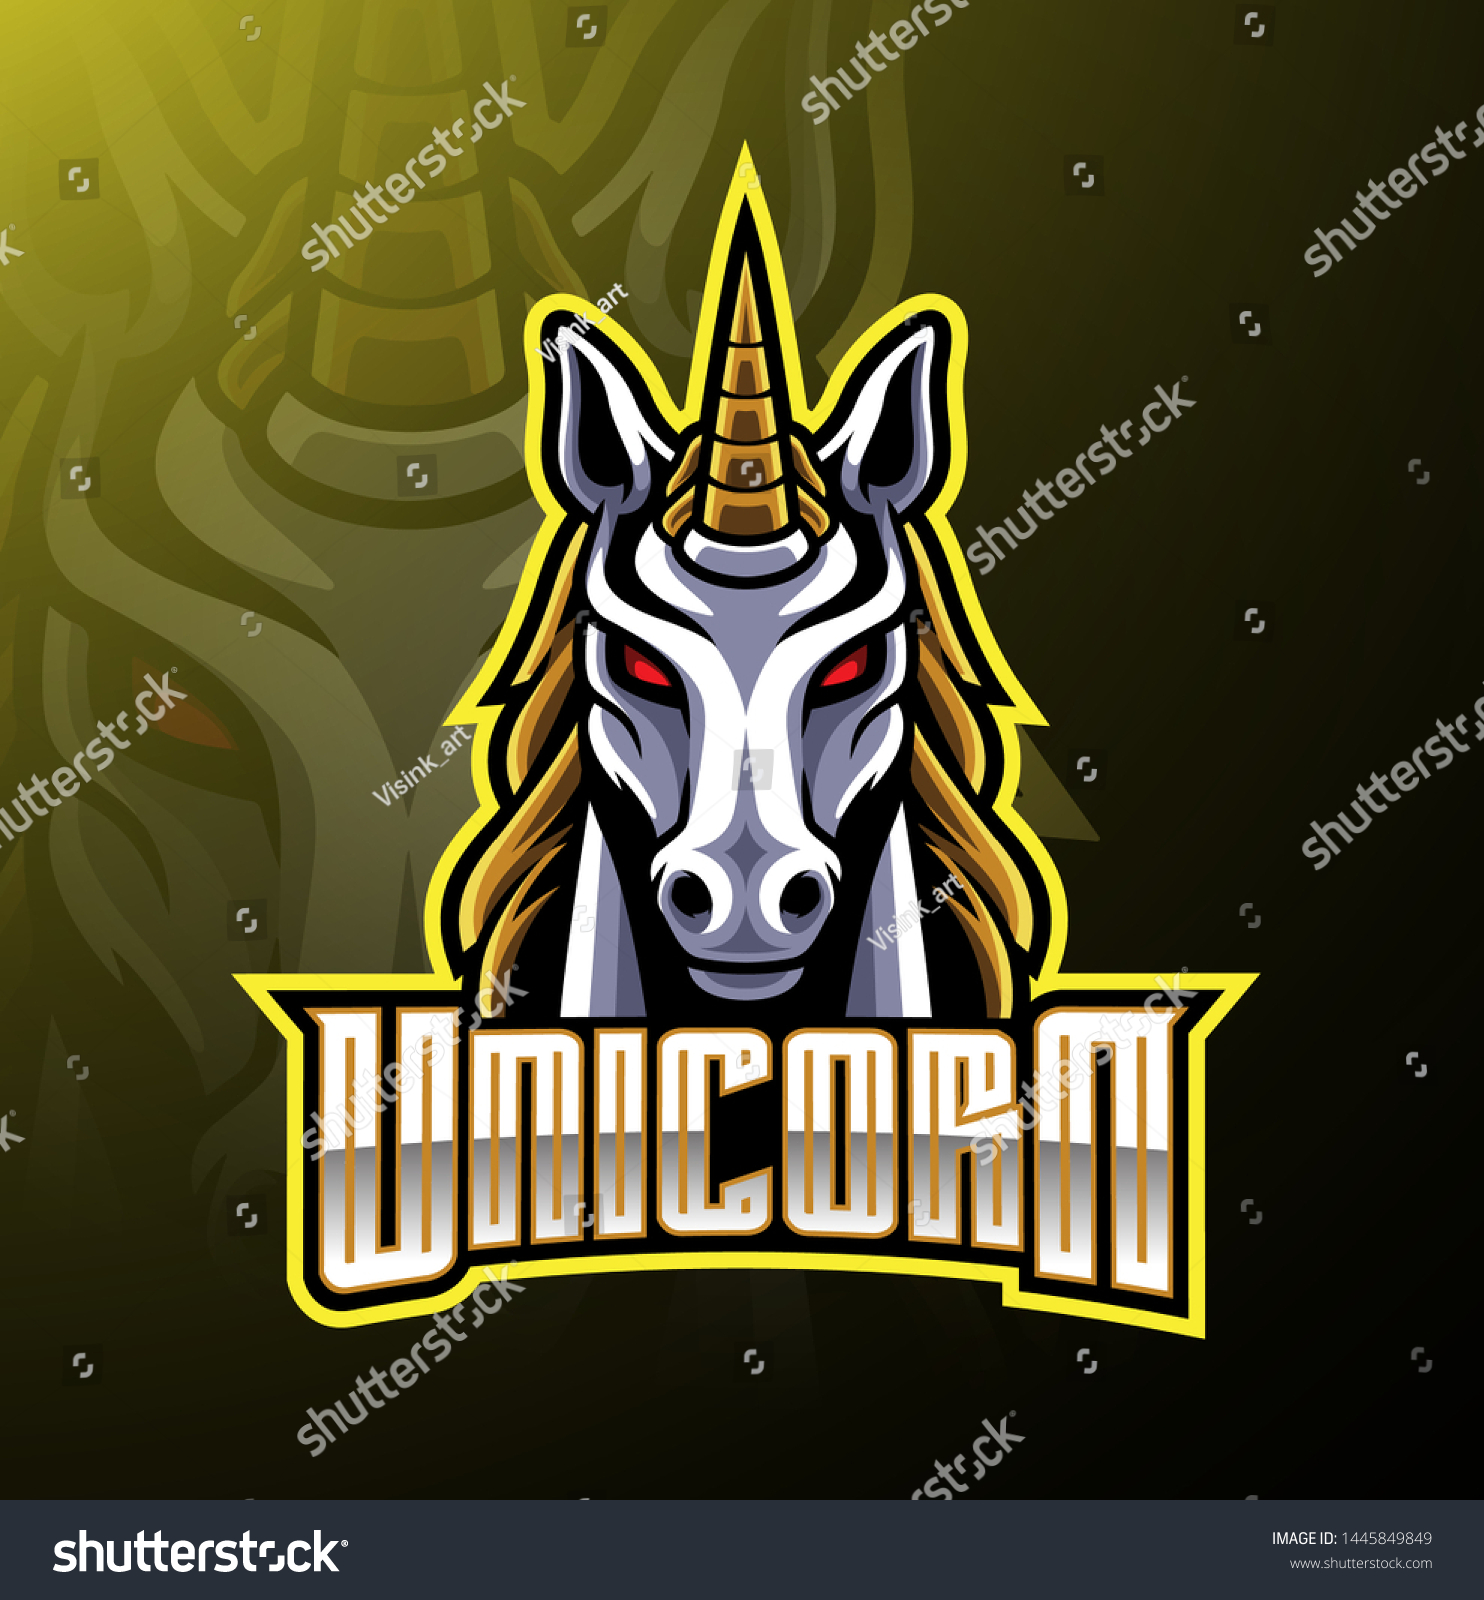 SVG of Unicorn head mascot logo design svg